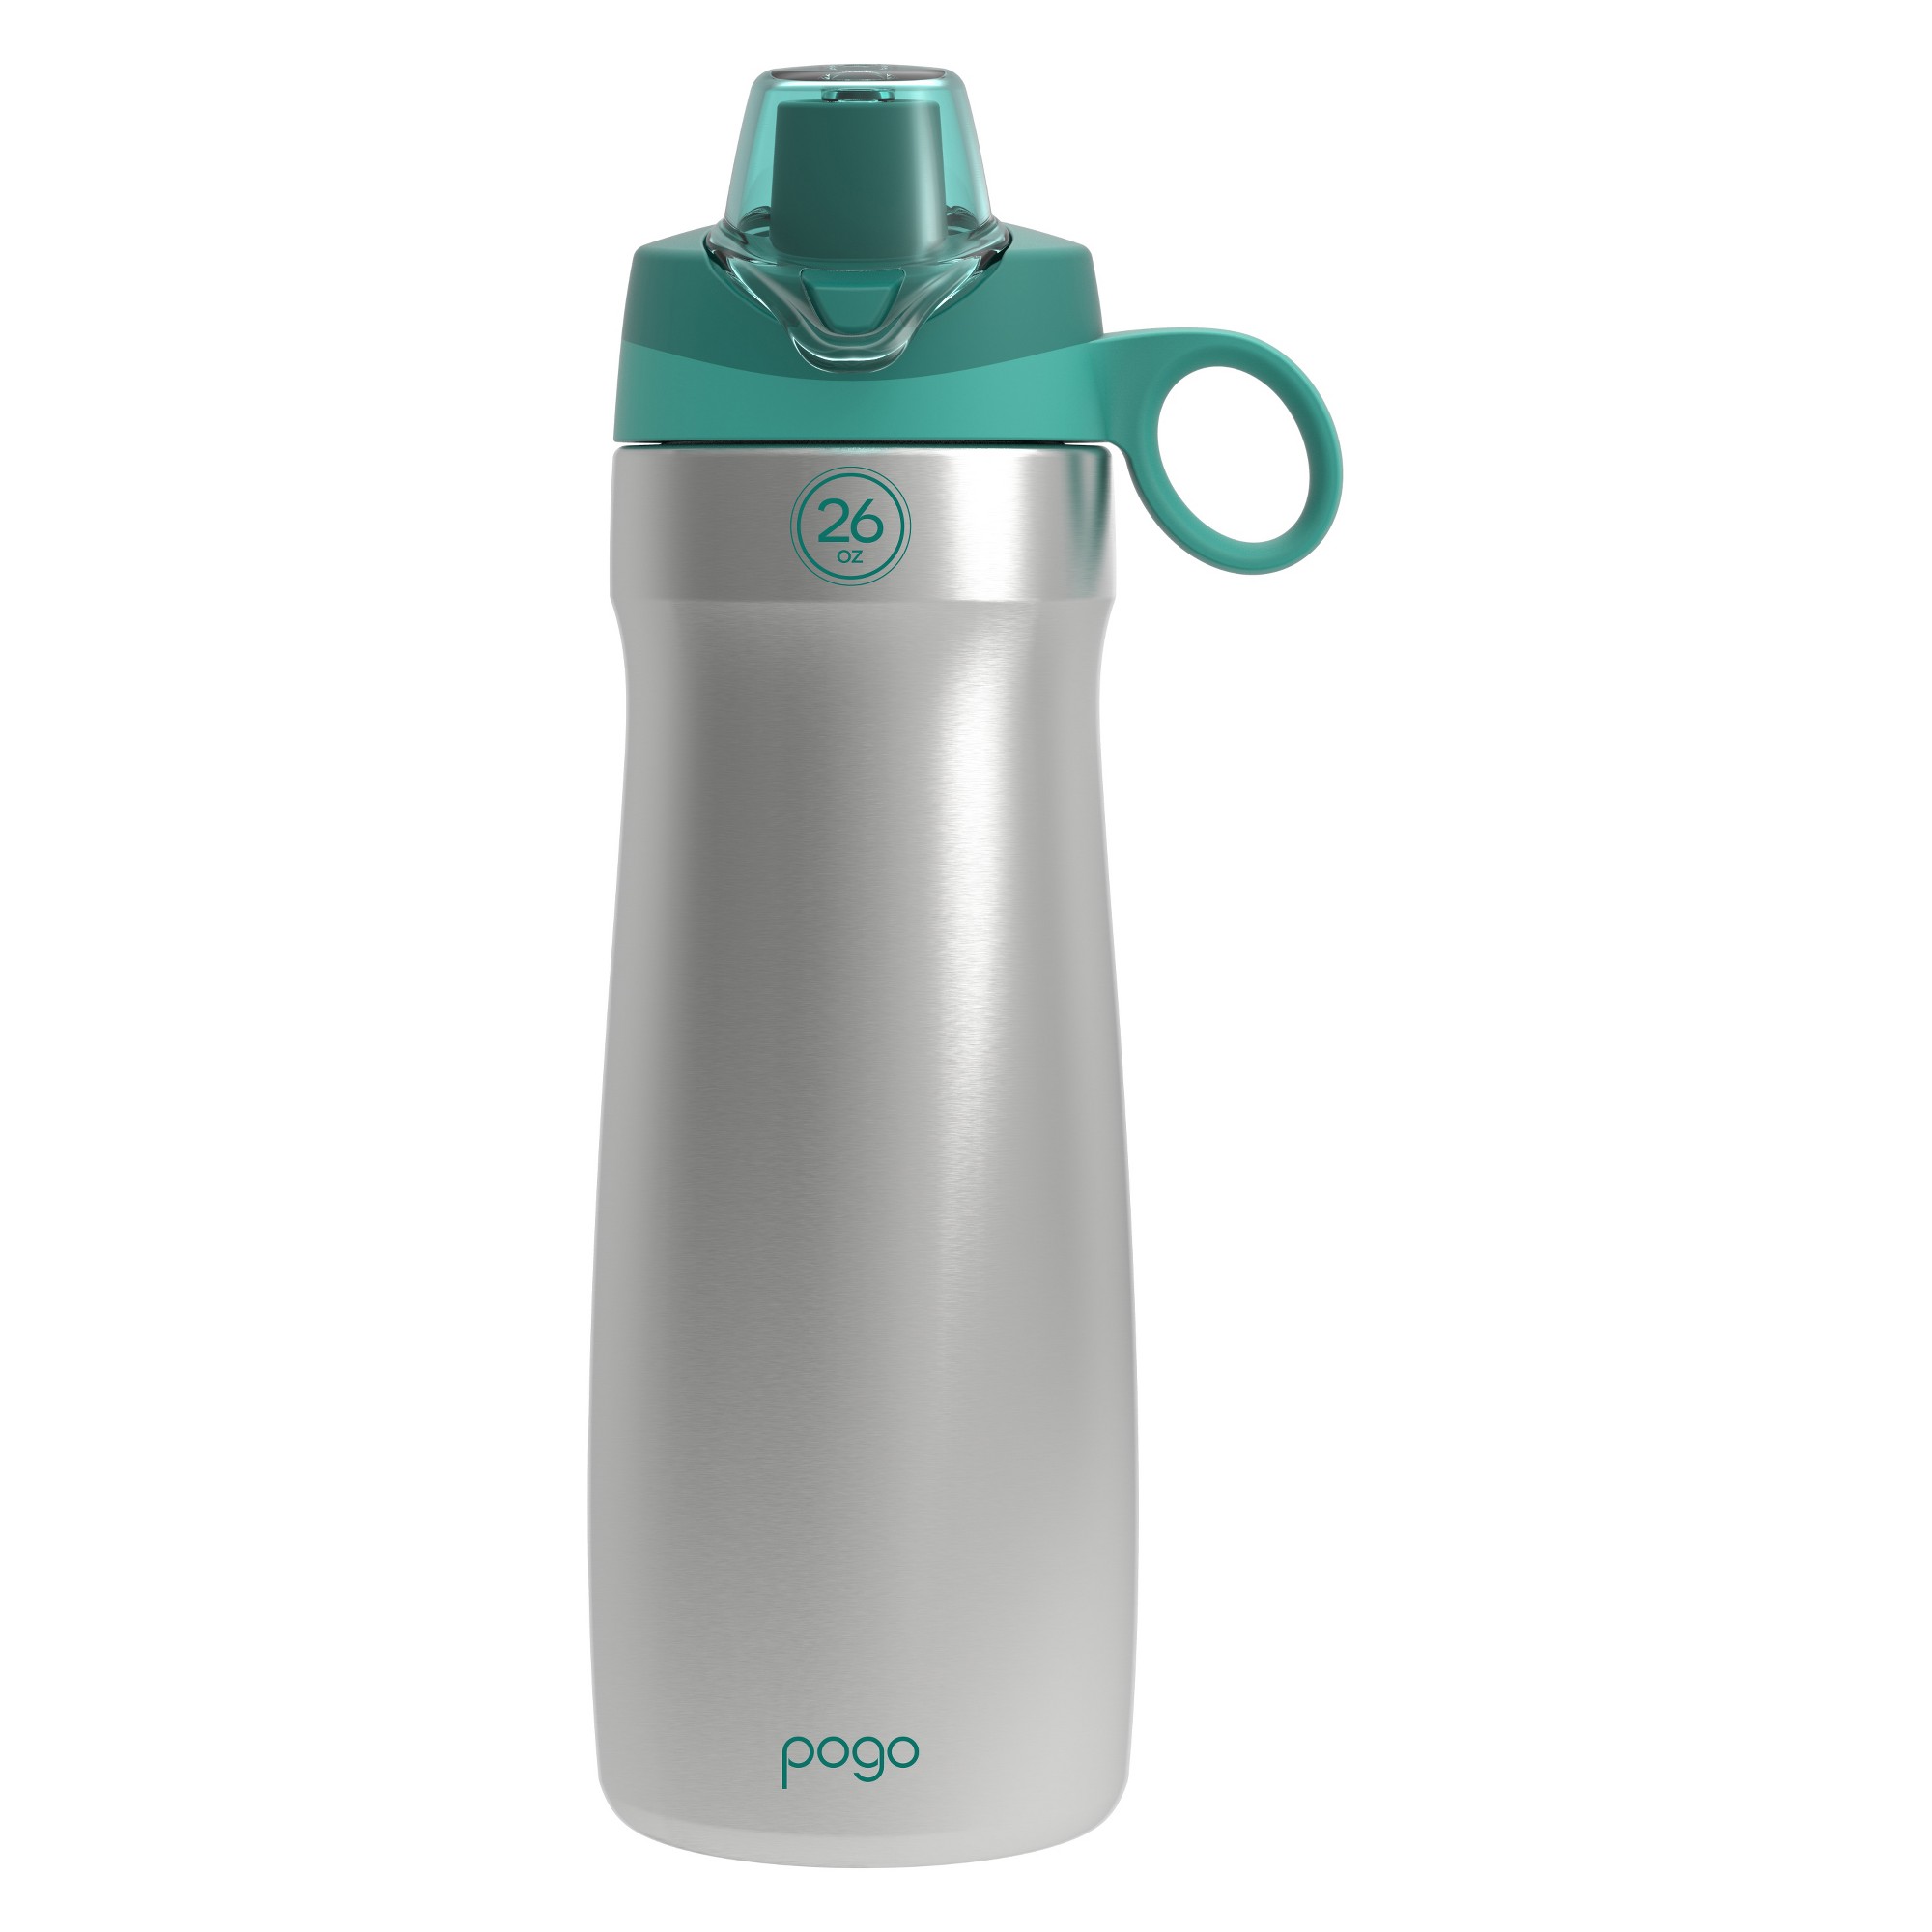 Pogo Stainless Steel Water Bottle